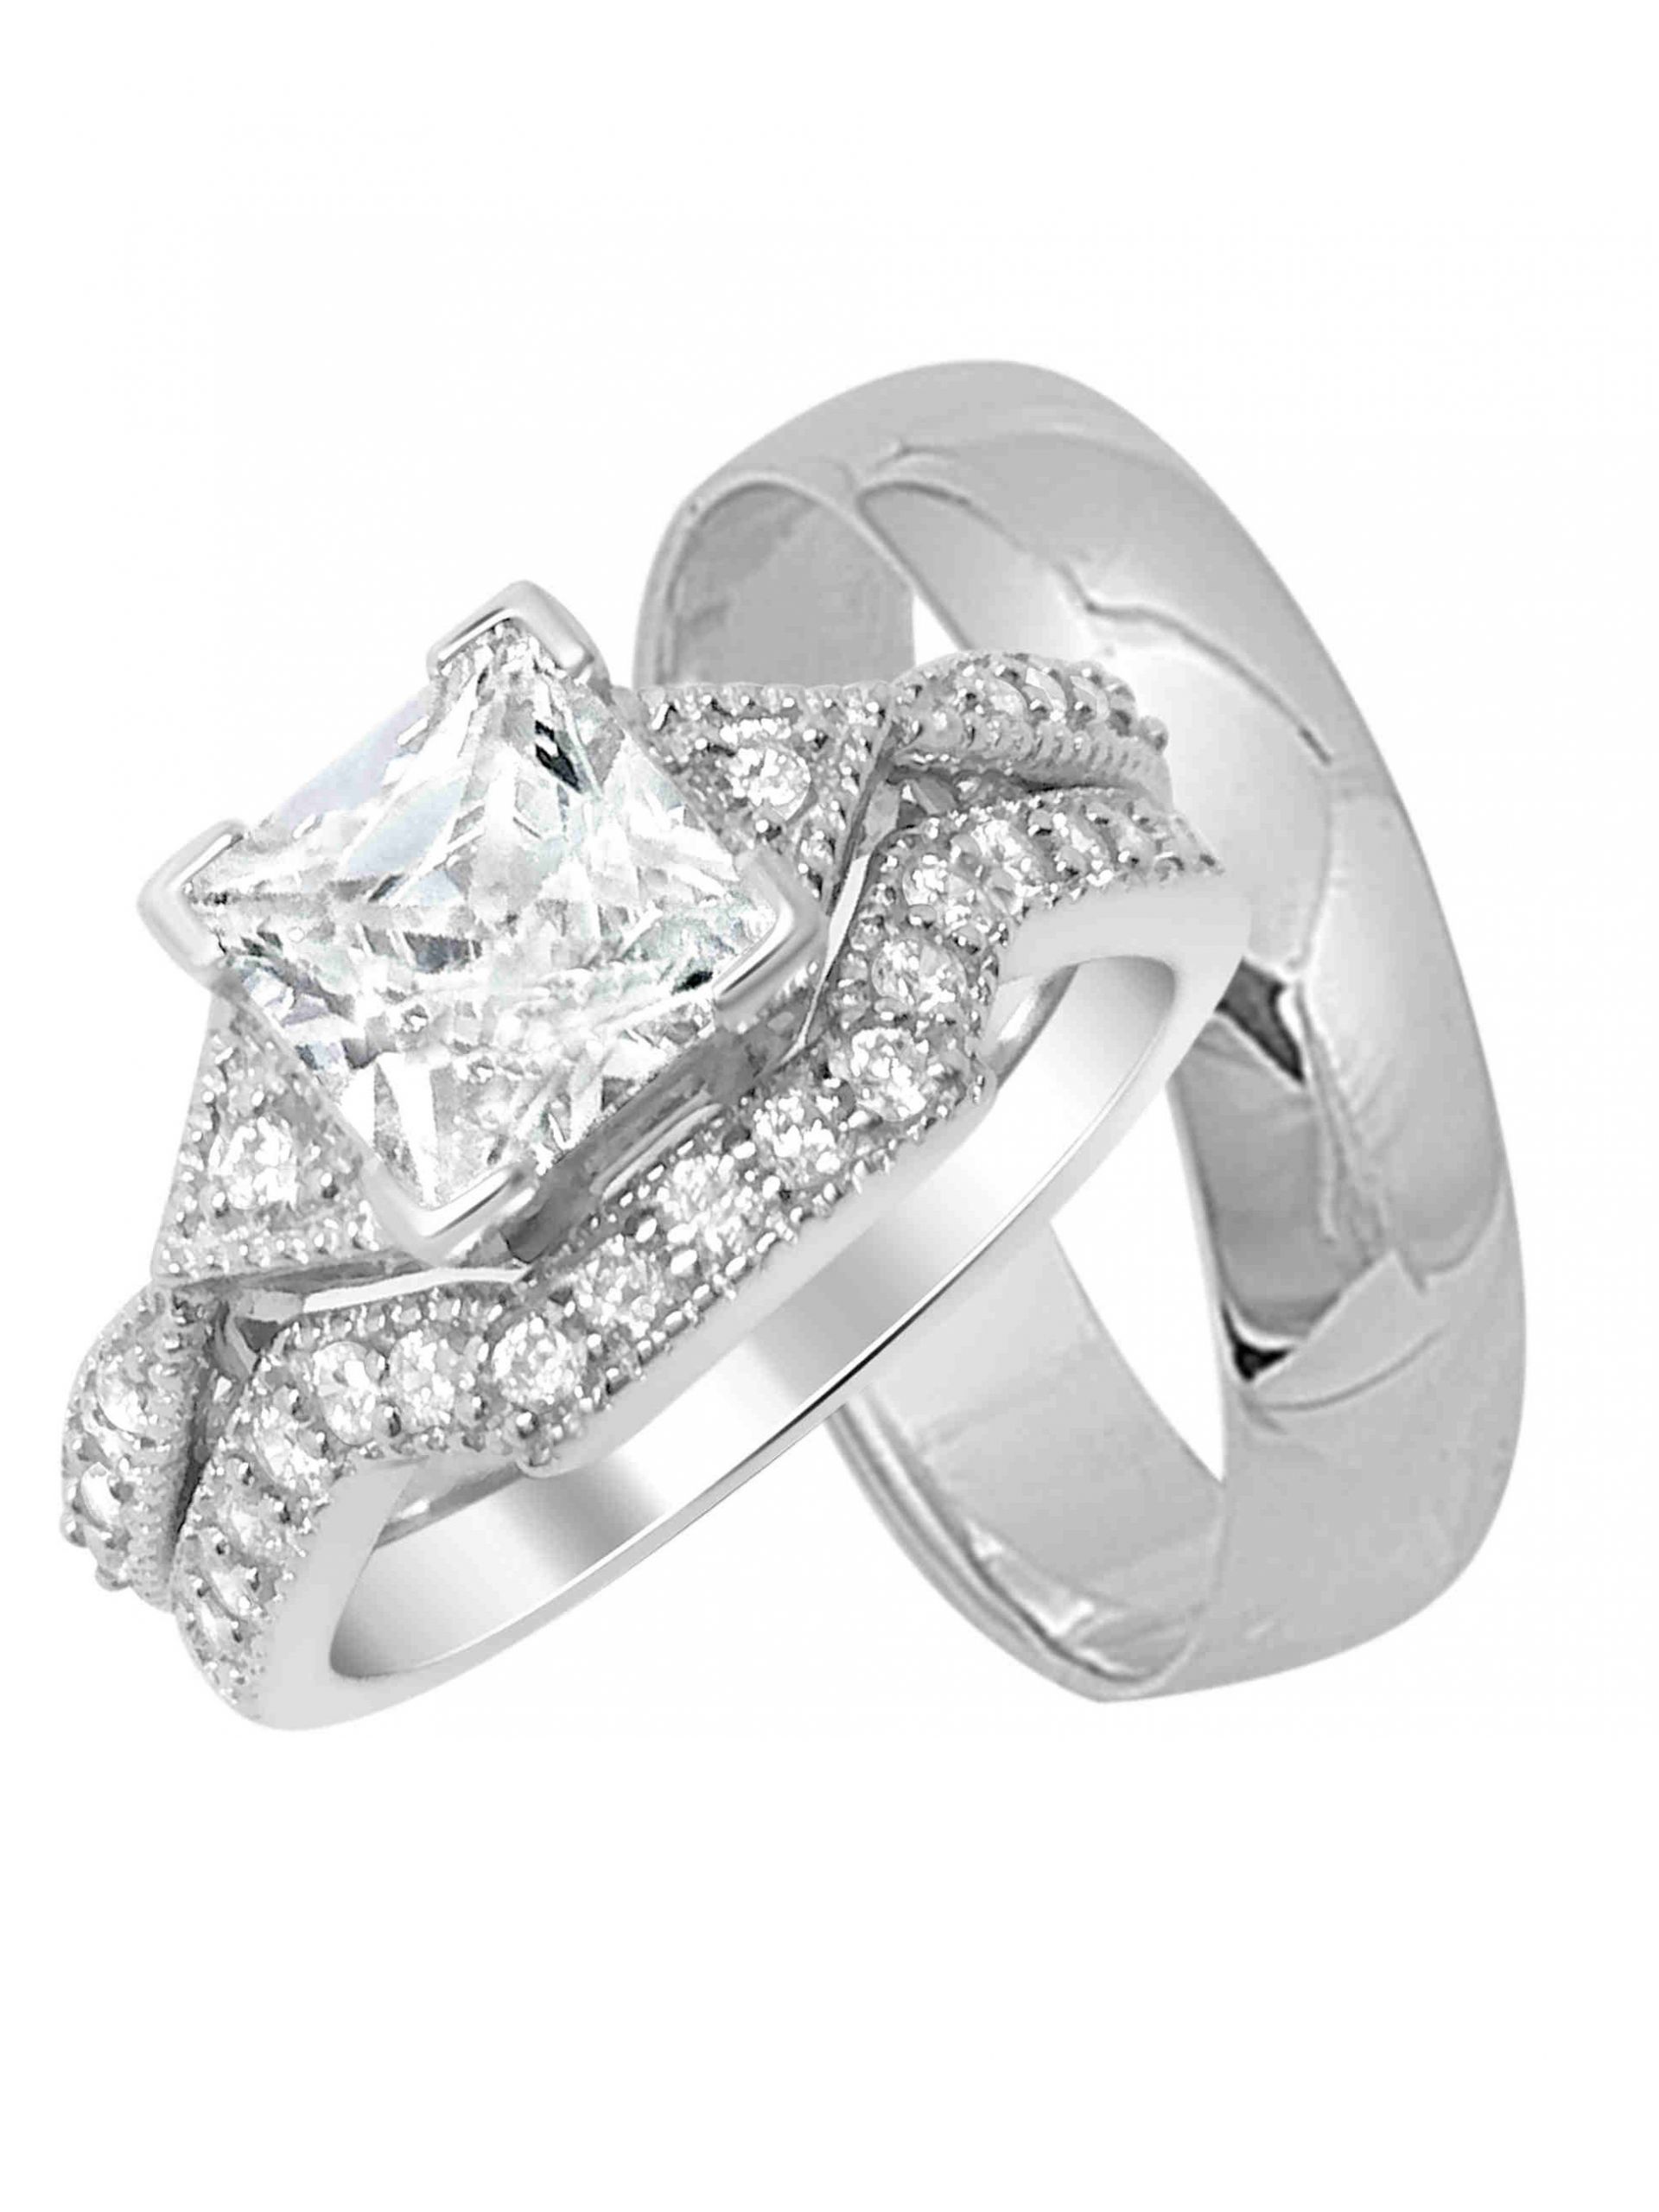 Wedding Rings Sets At Walmart
 LaRaso & Co His Hers Silver Matching Wedding Bands Ring